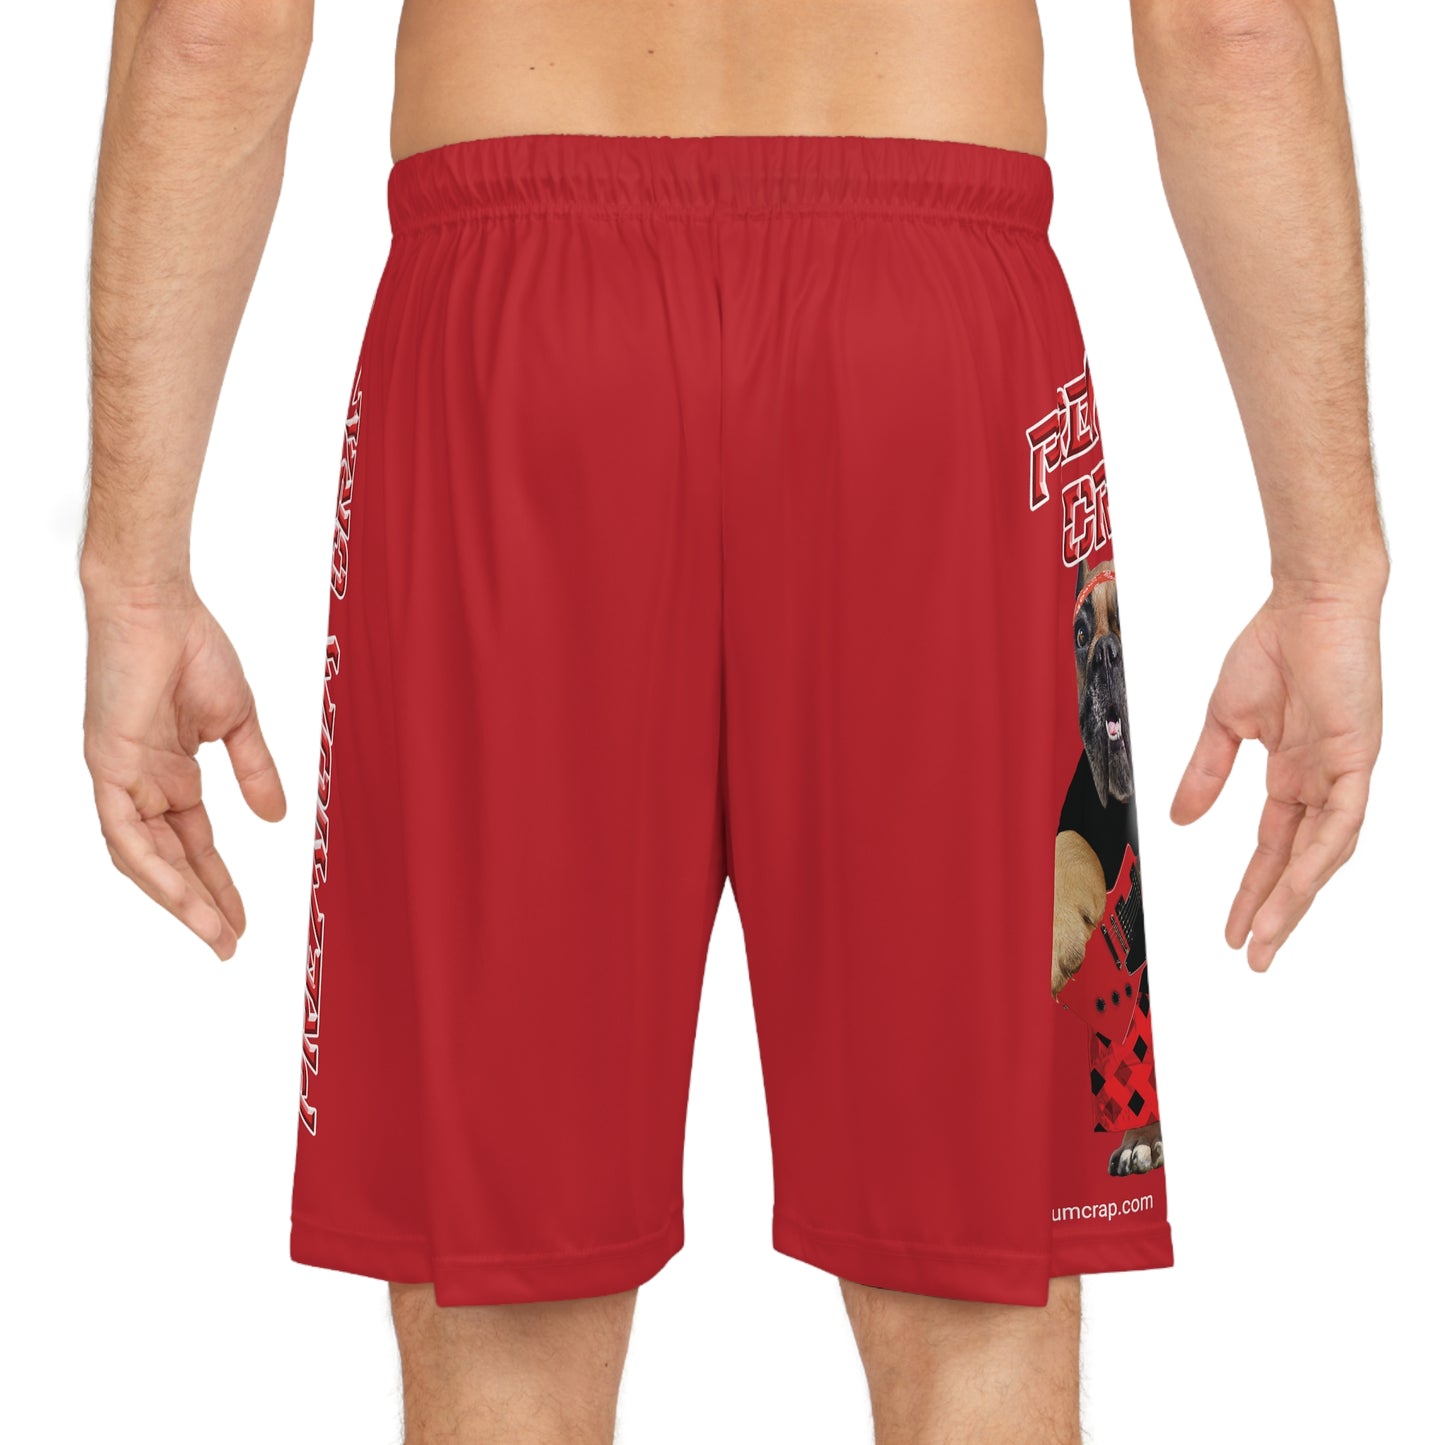 Premium Crap II Basketball Shorts - Dark Red